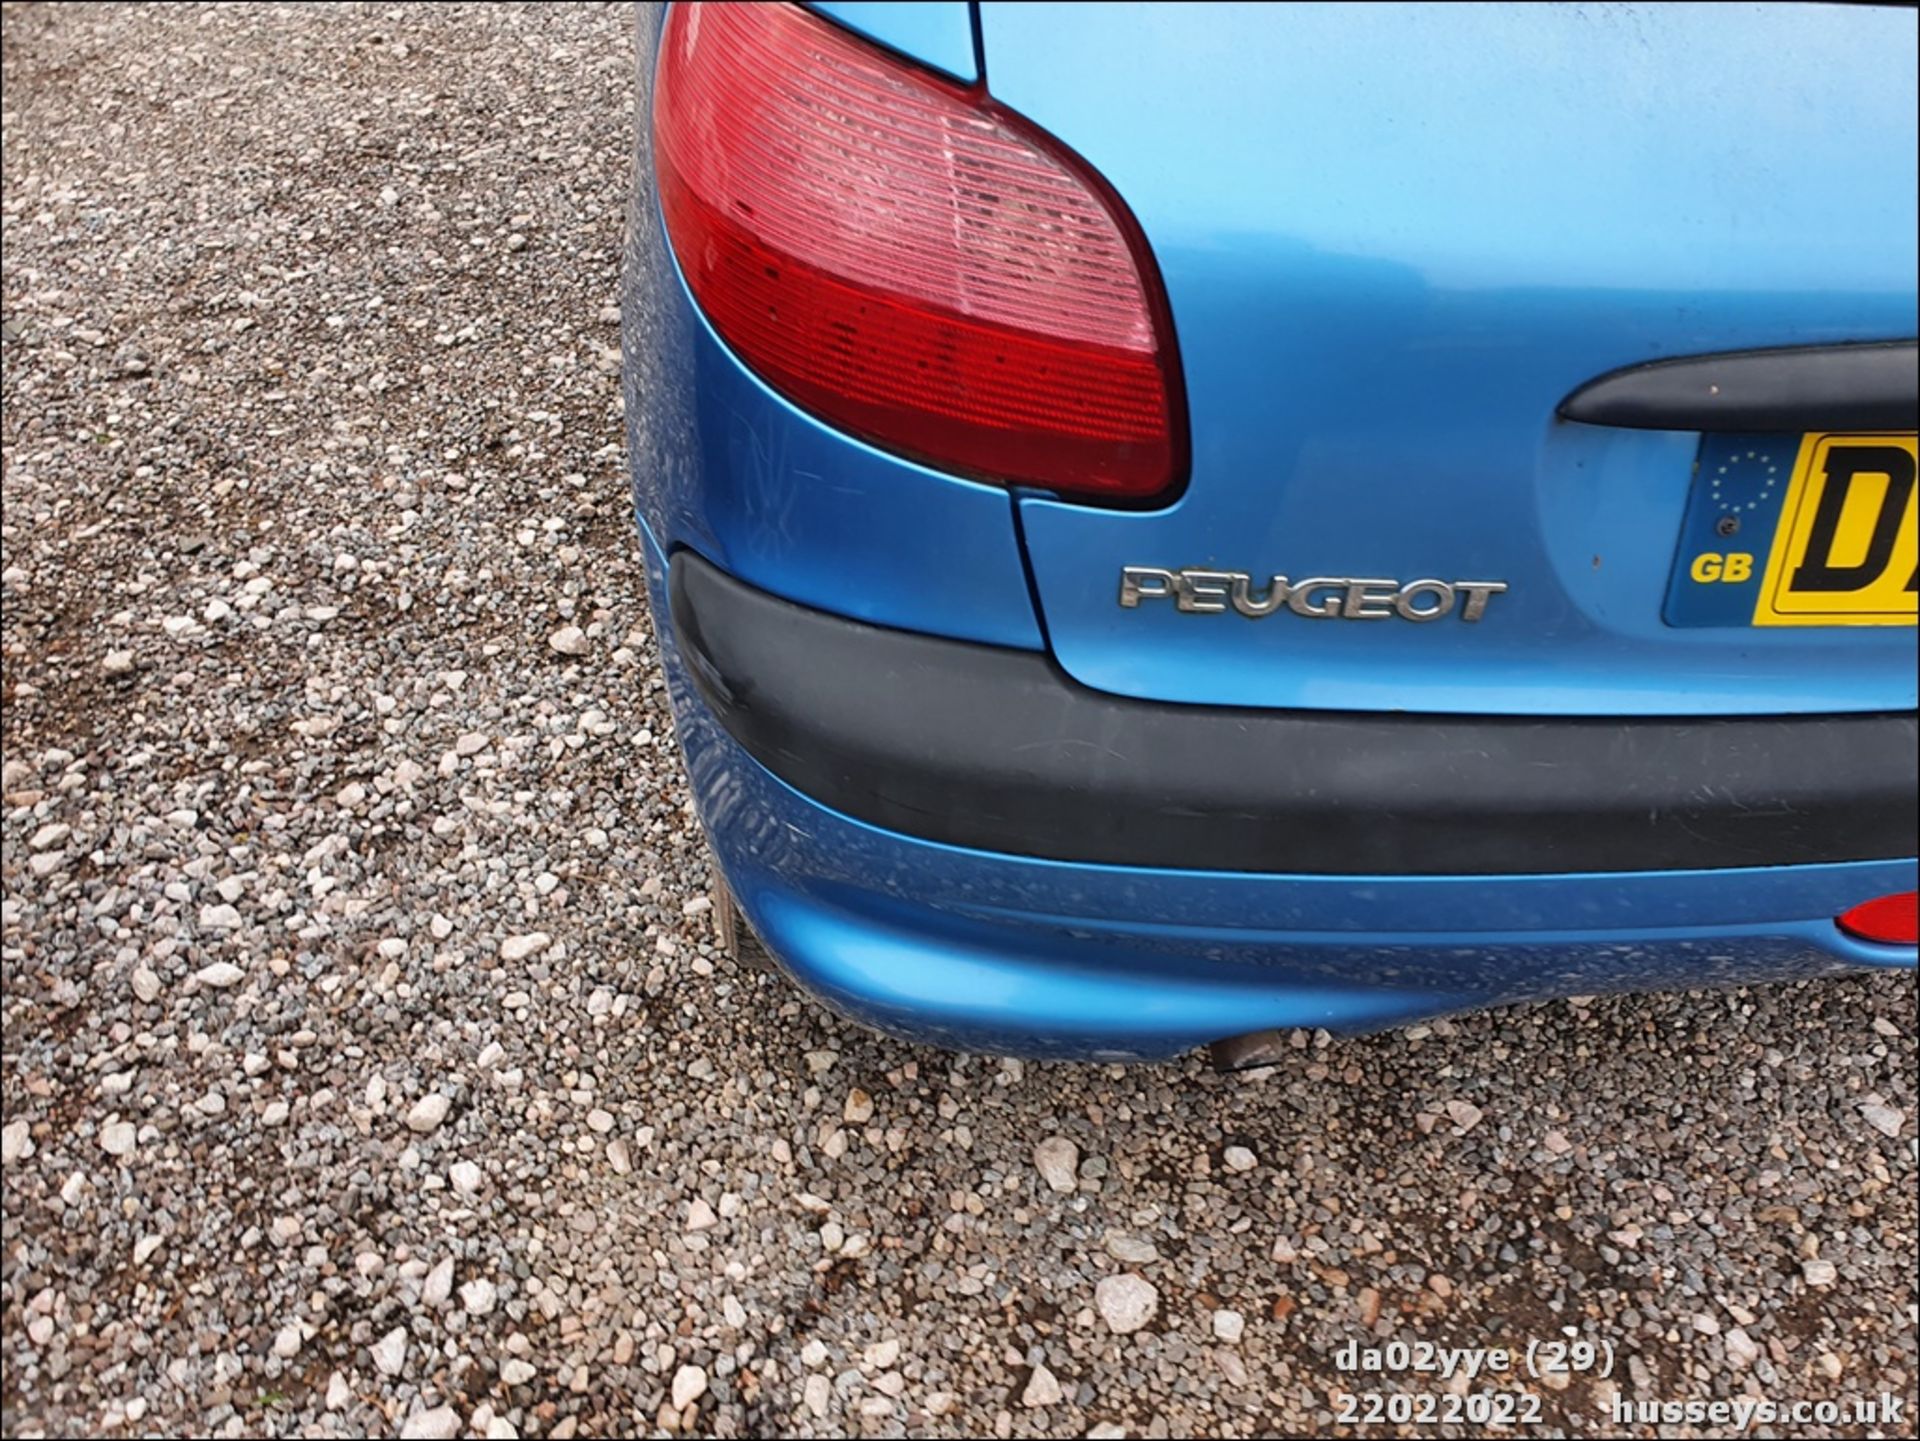 02/02 PEUGEOT 206 STYLE HDI - 1398cc 3dr Hatchback (Blue, 103k) - Image 54 of 63